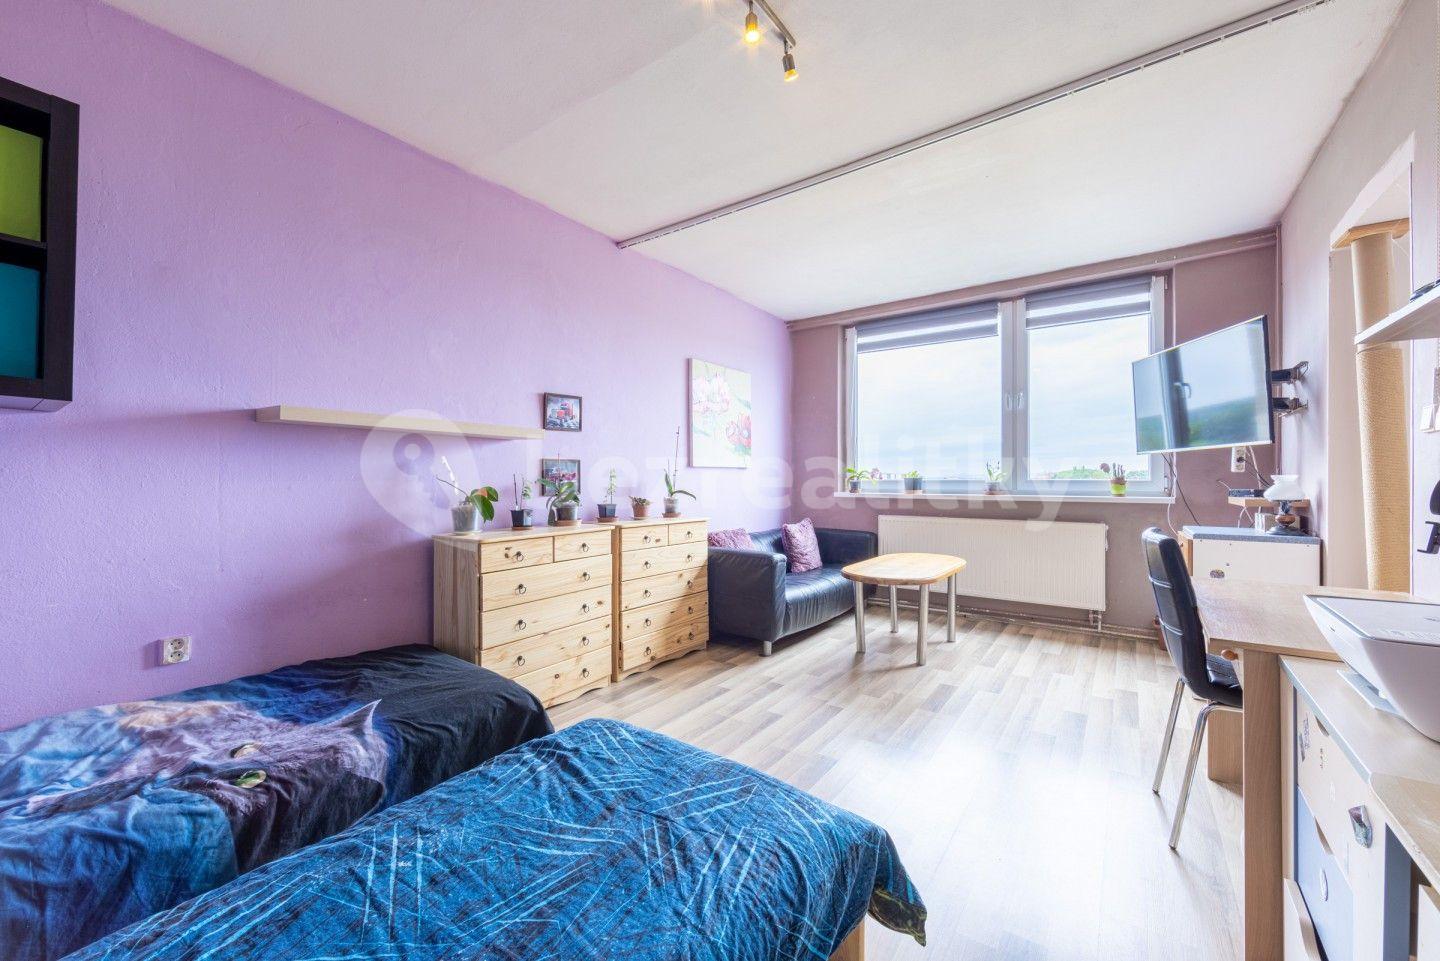 3 bedroom flat for sale, 74 m², U Hačky, Chomutov, Ústecký Region